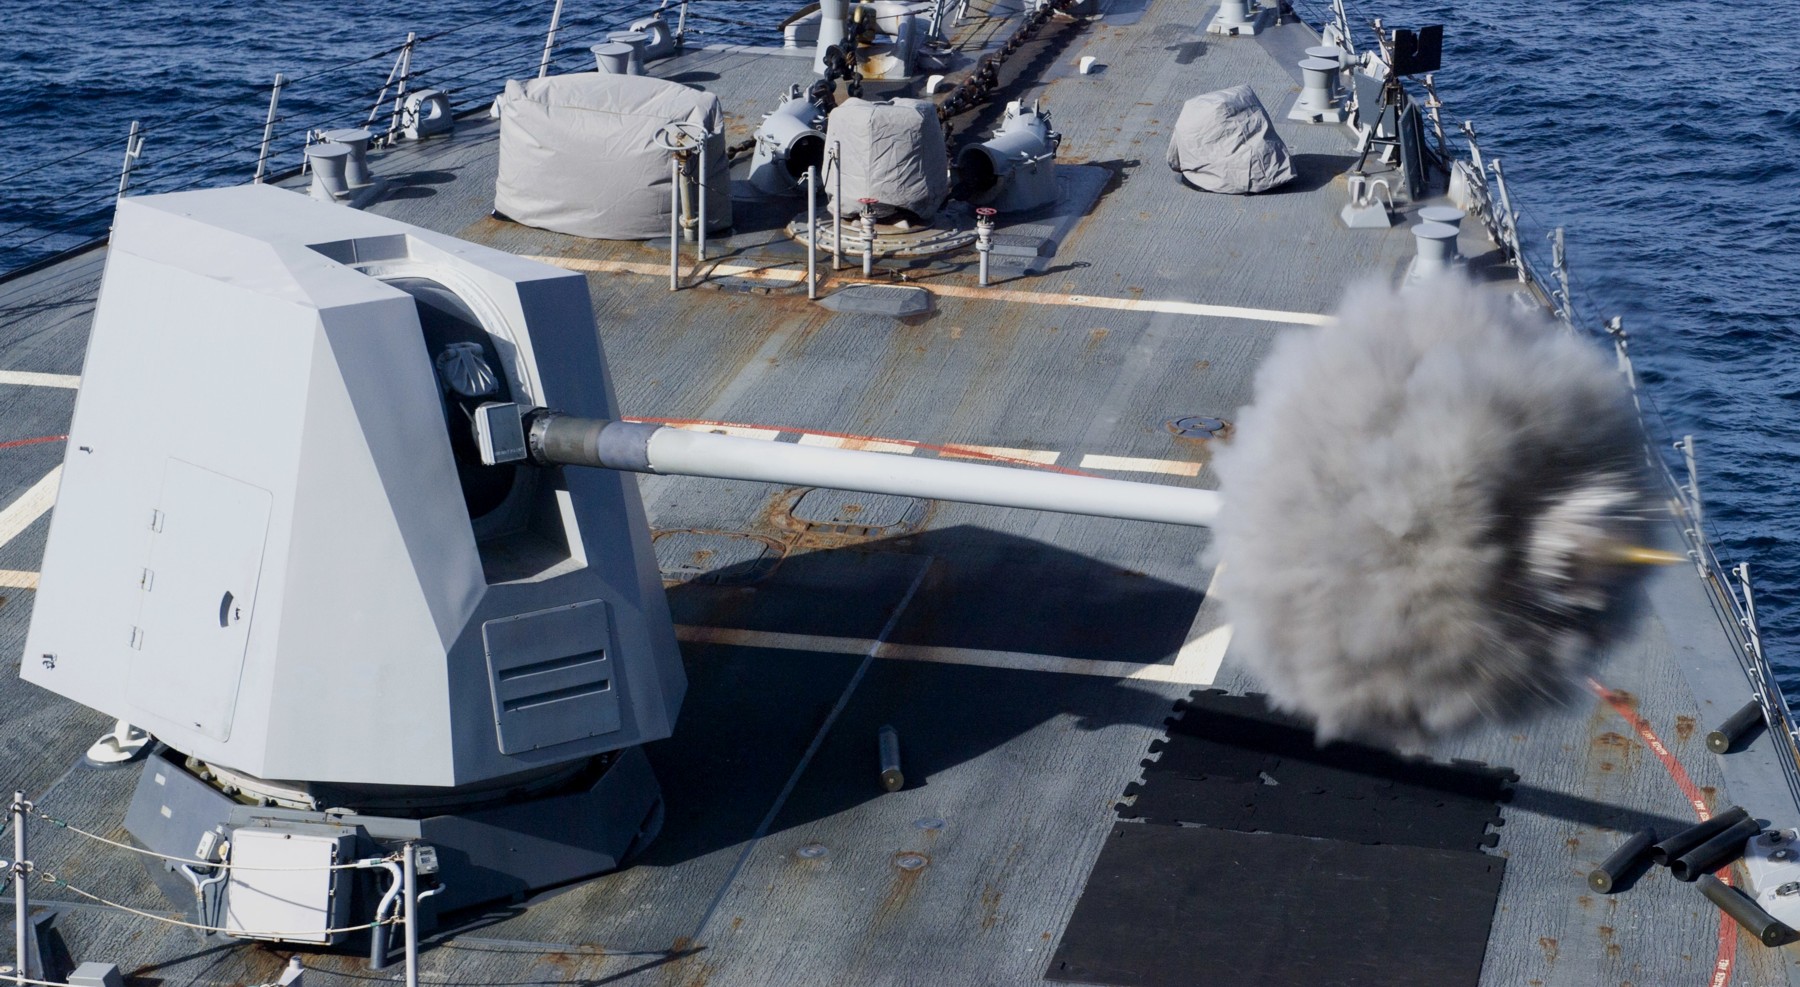 ddg-112 uss michael murphy arleigh burke class guided missile destroyer aegis us navy gun fire exercise 43